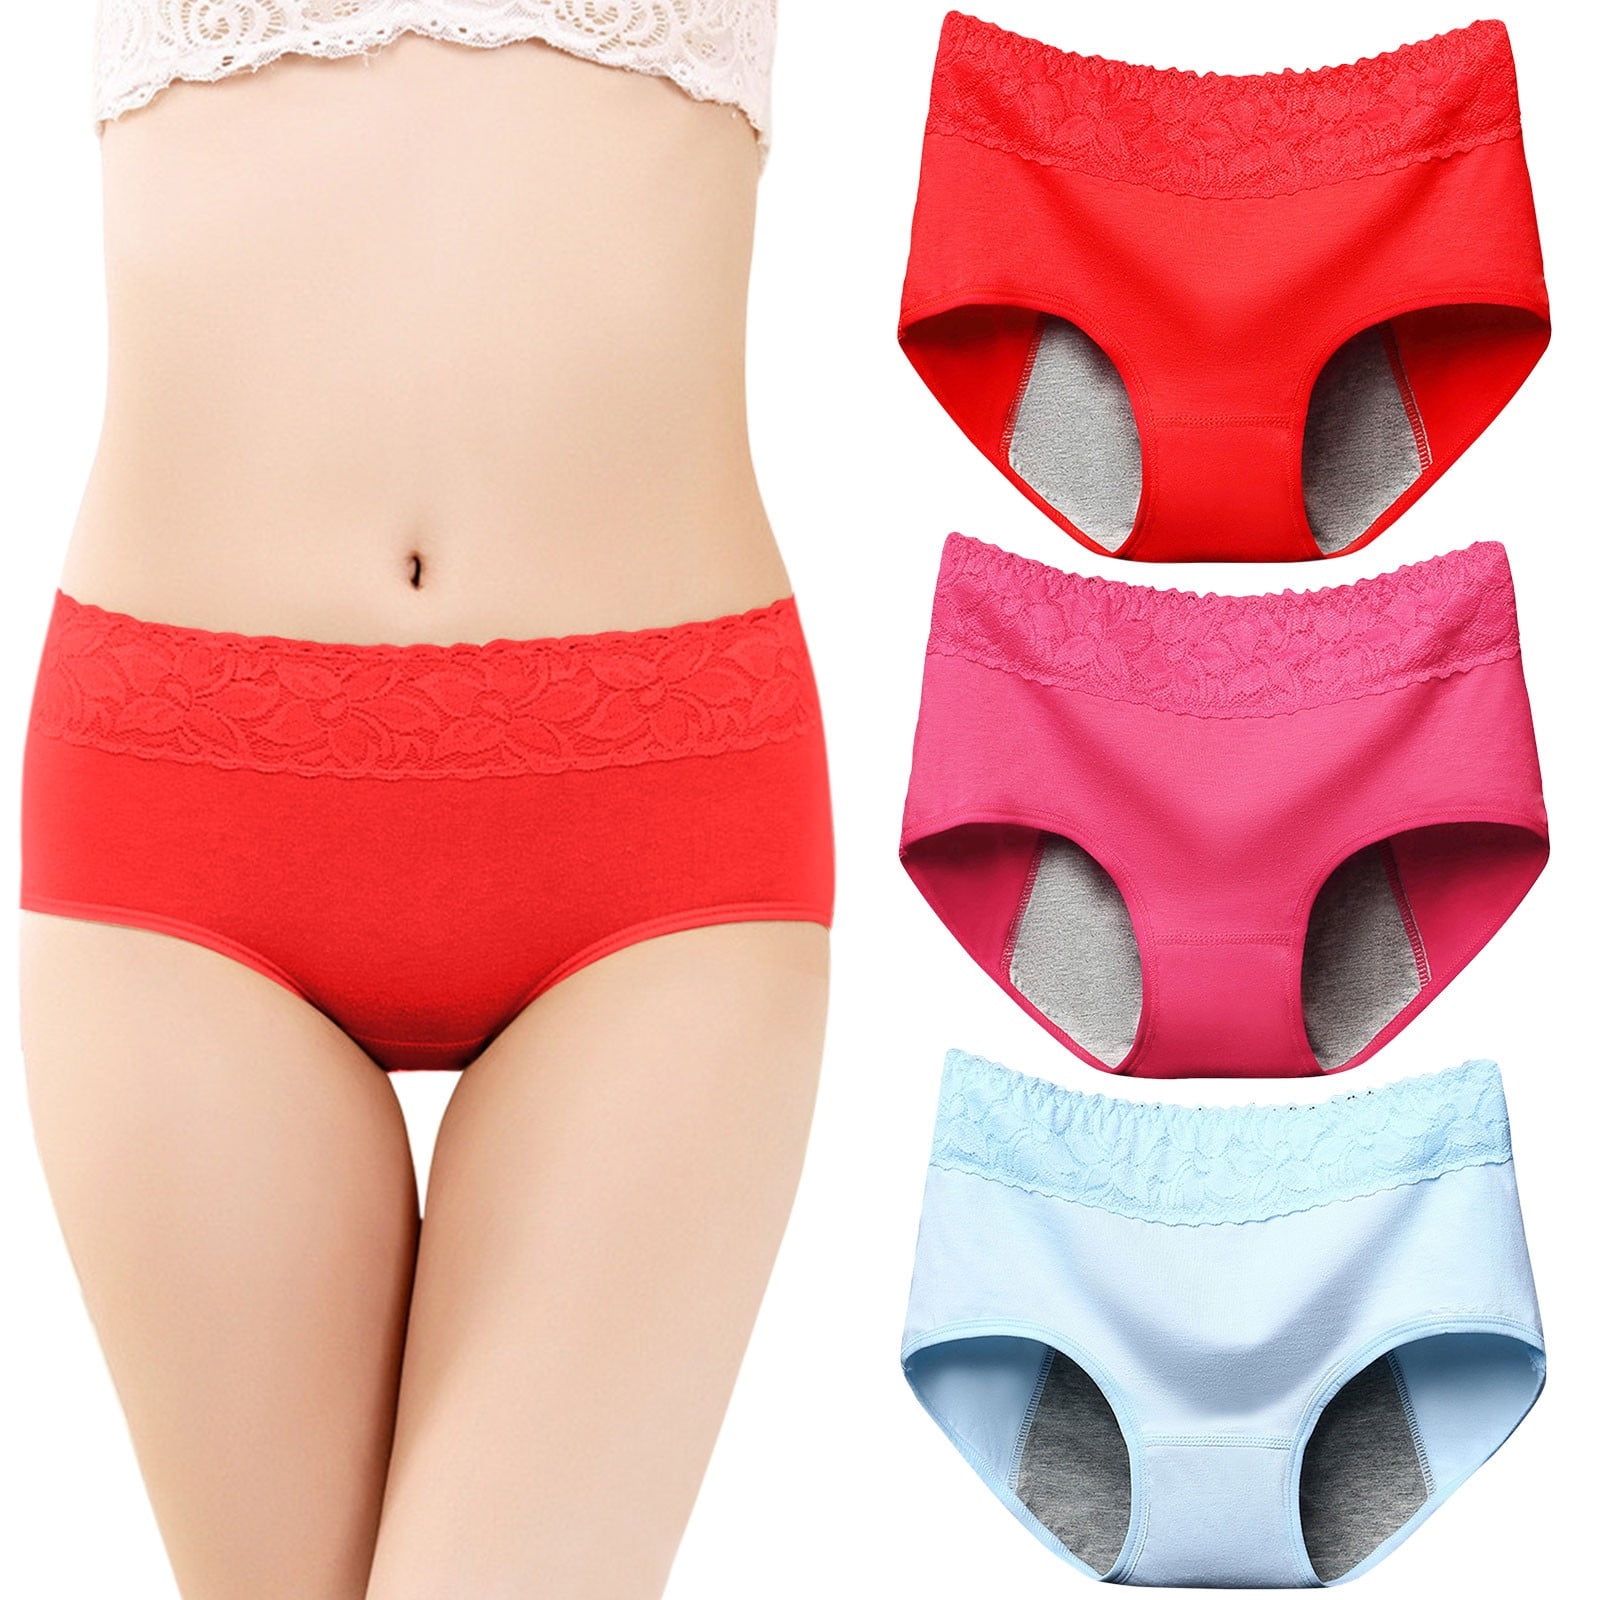 Rovga Women Panties Print Lingerie Temptation Low-Waist Panties Underwear 